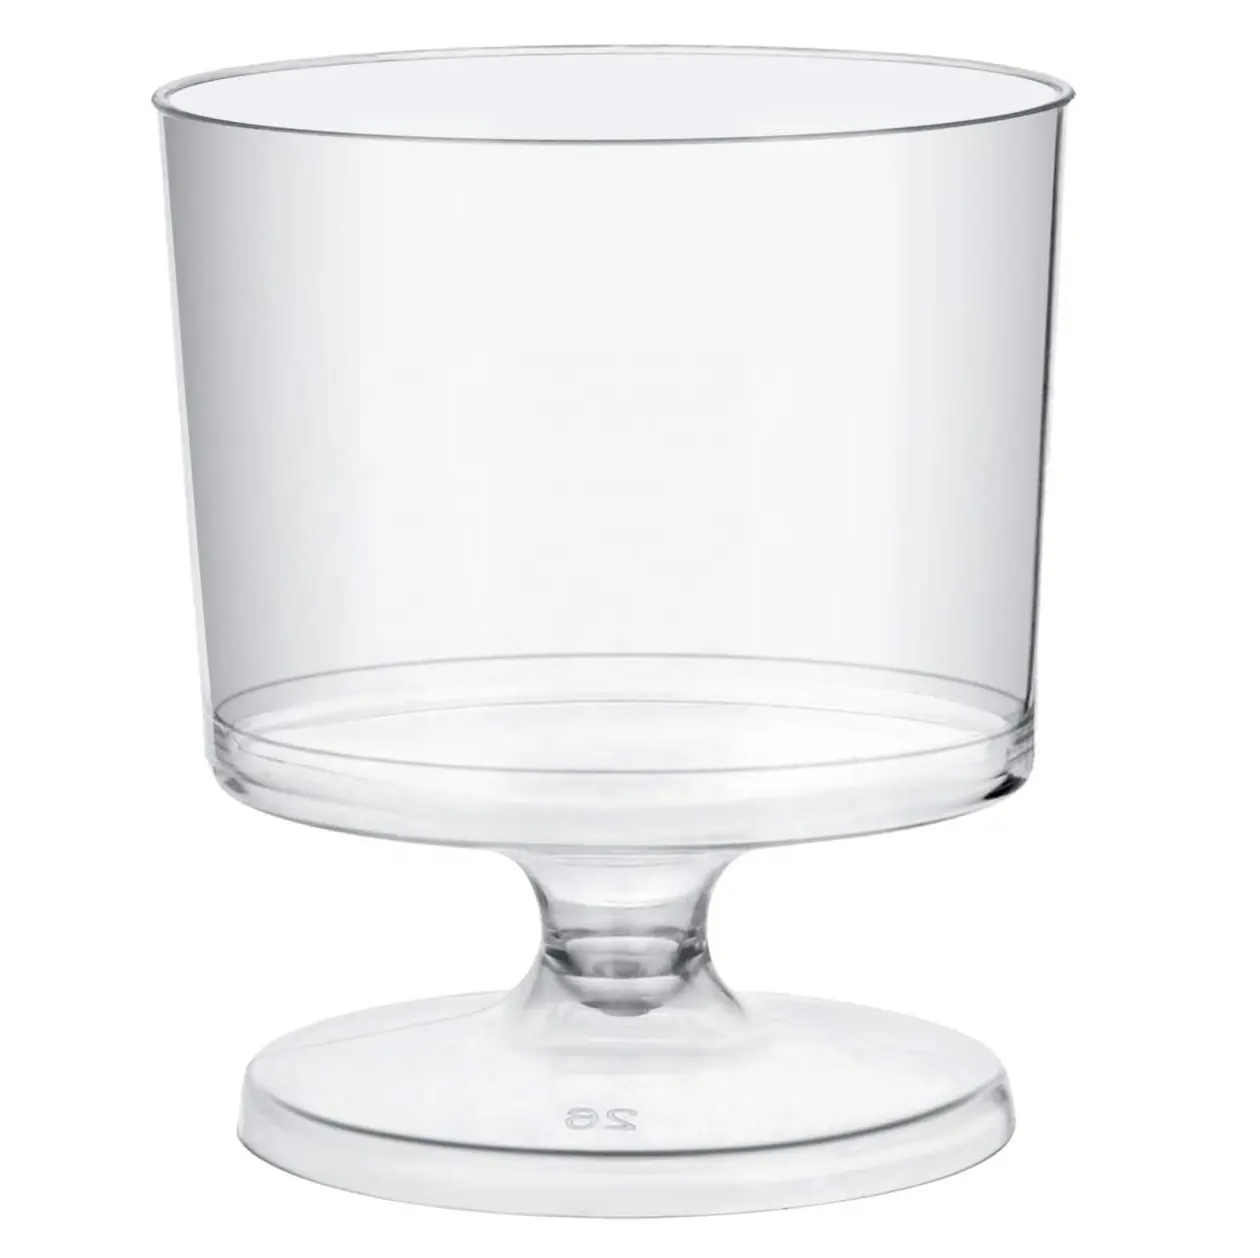 PLASTIC LIQUOR WINE CORDIAL SAMPLING CUPS DISPOSABLE WINE GLASSES